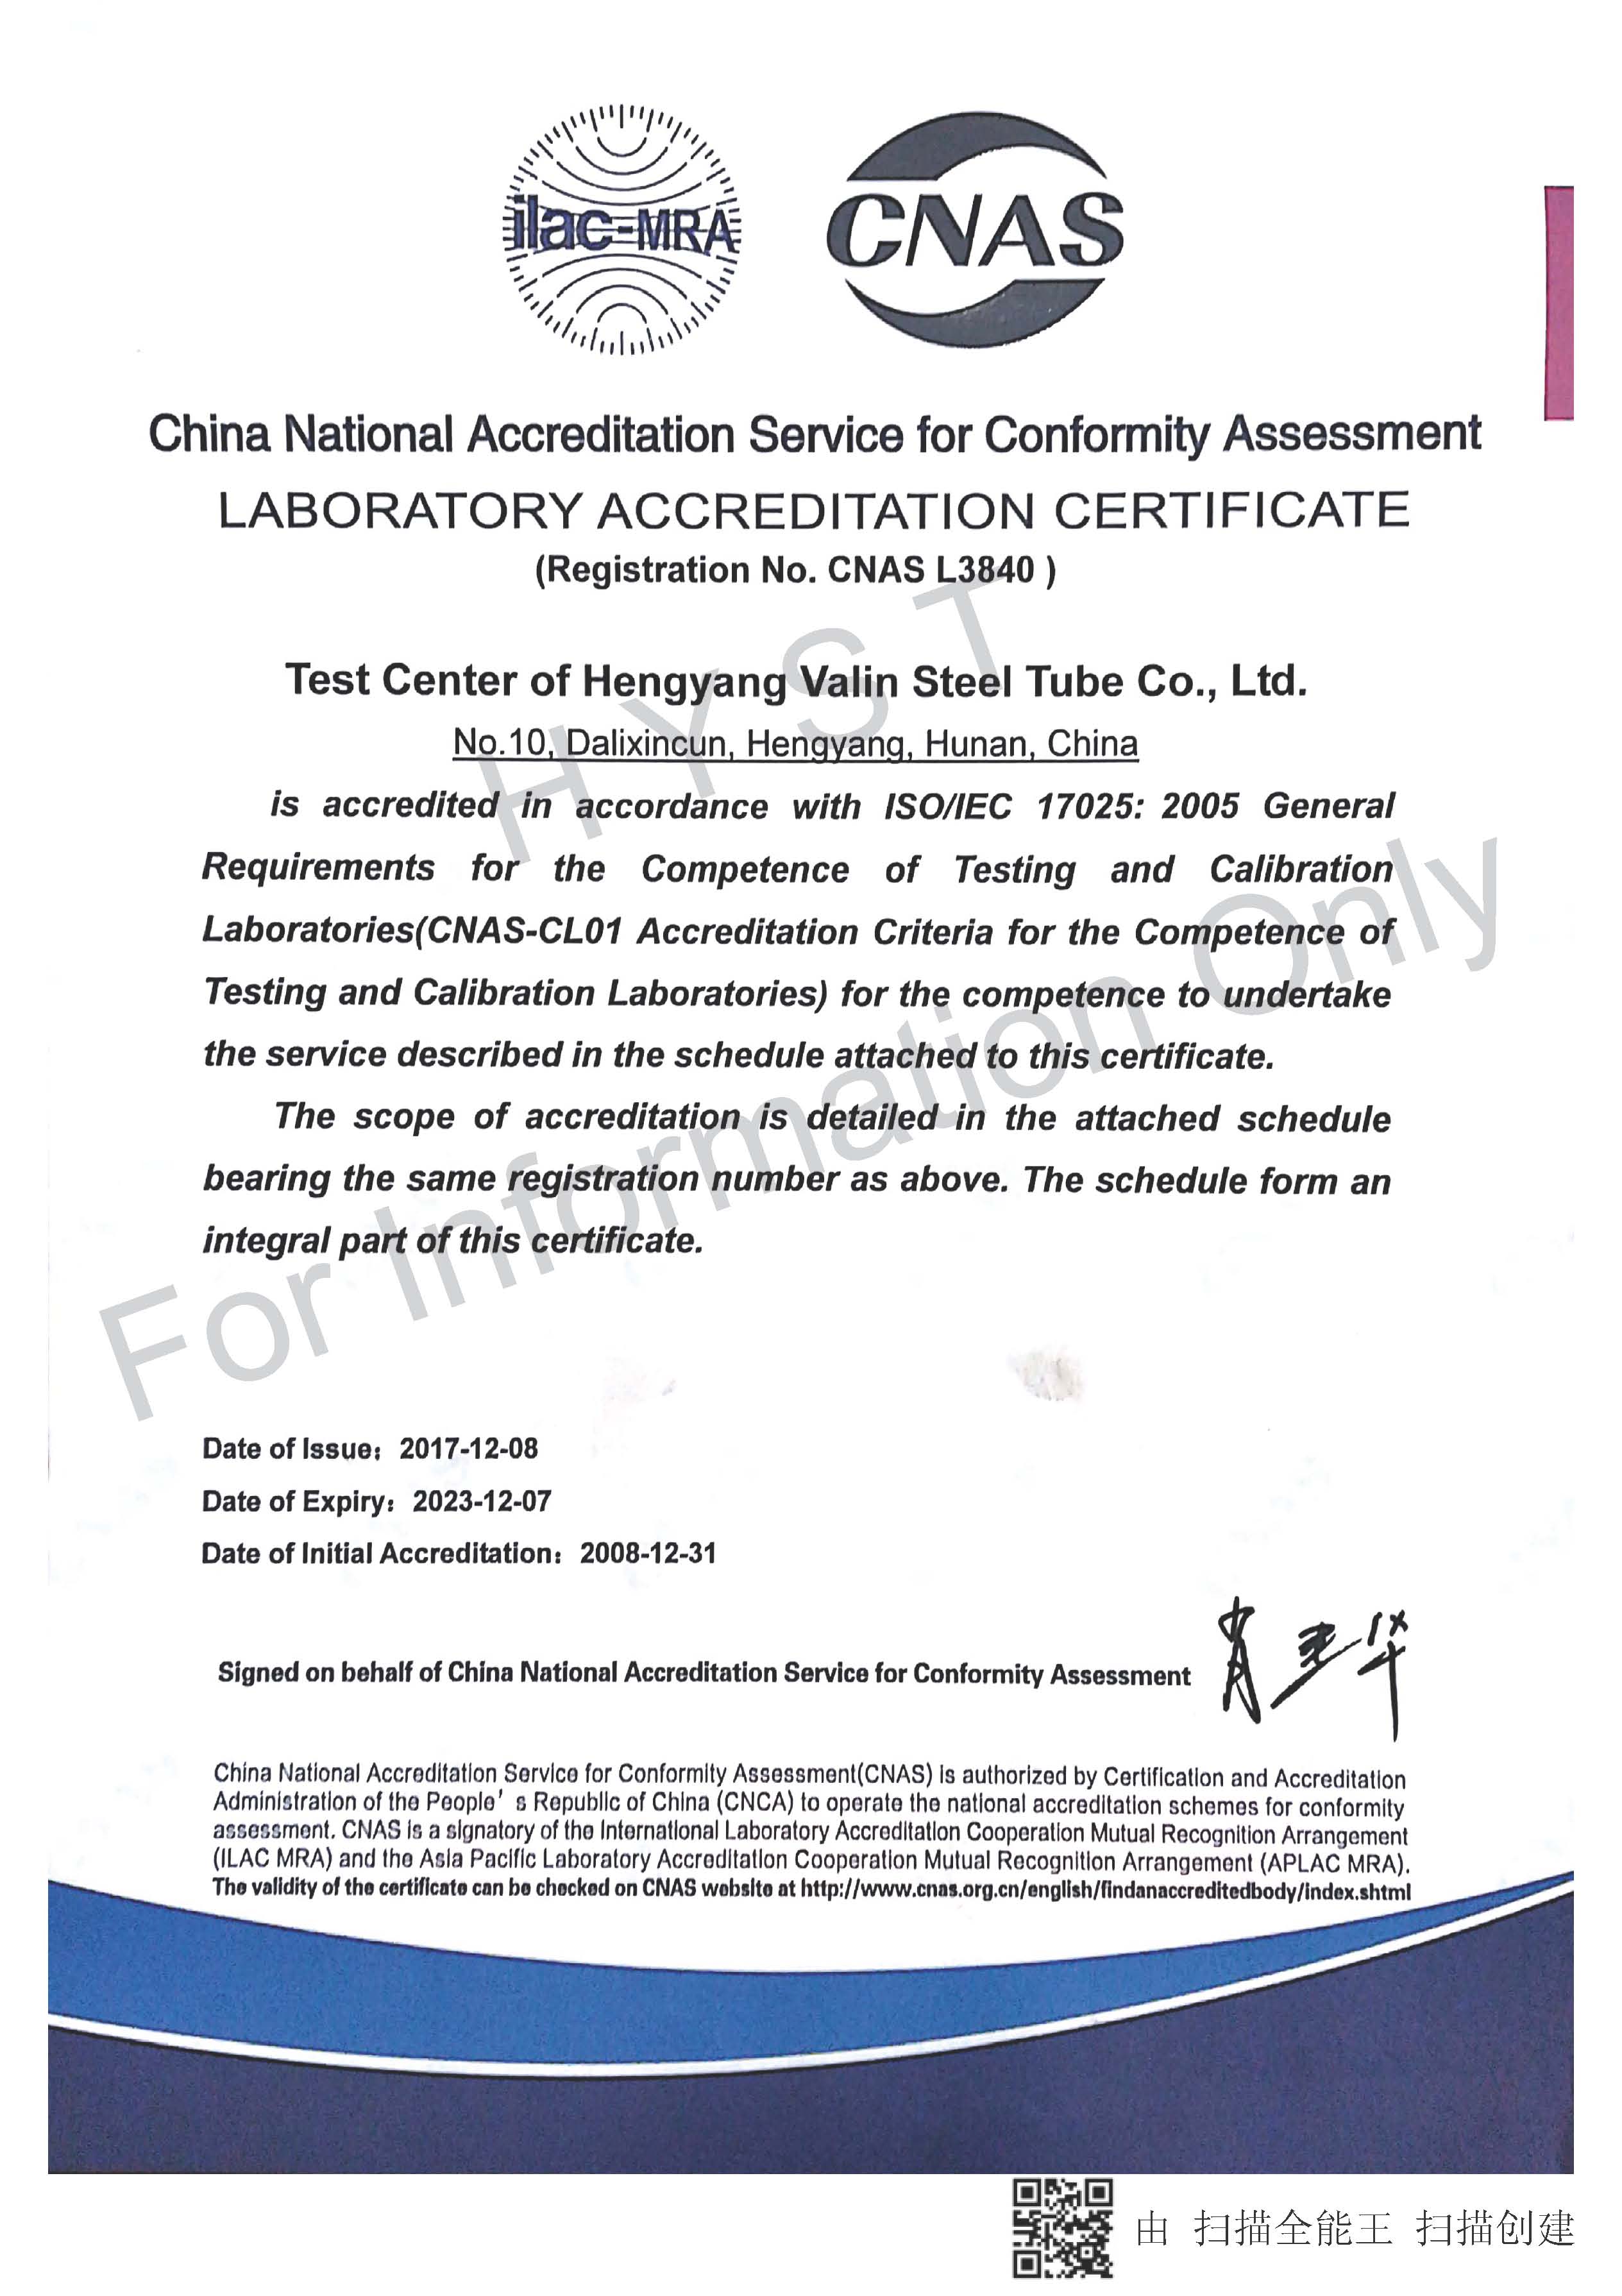 CNAS Certificate 